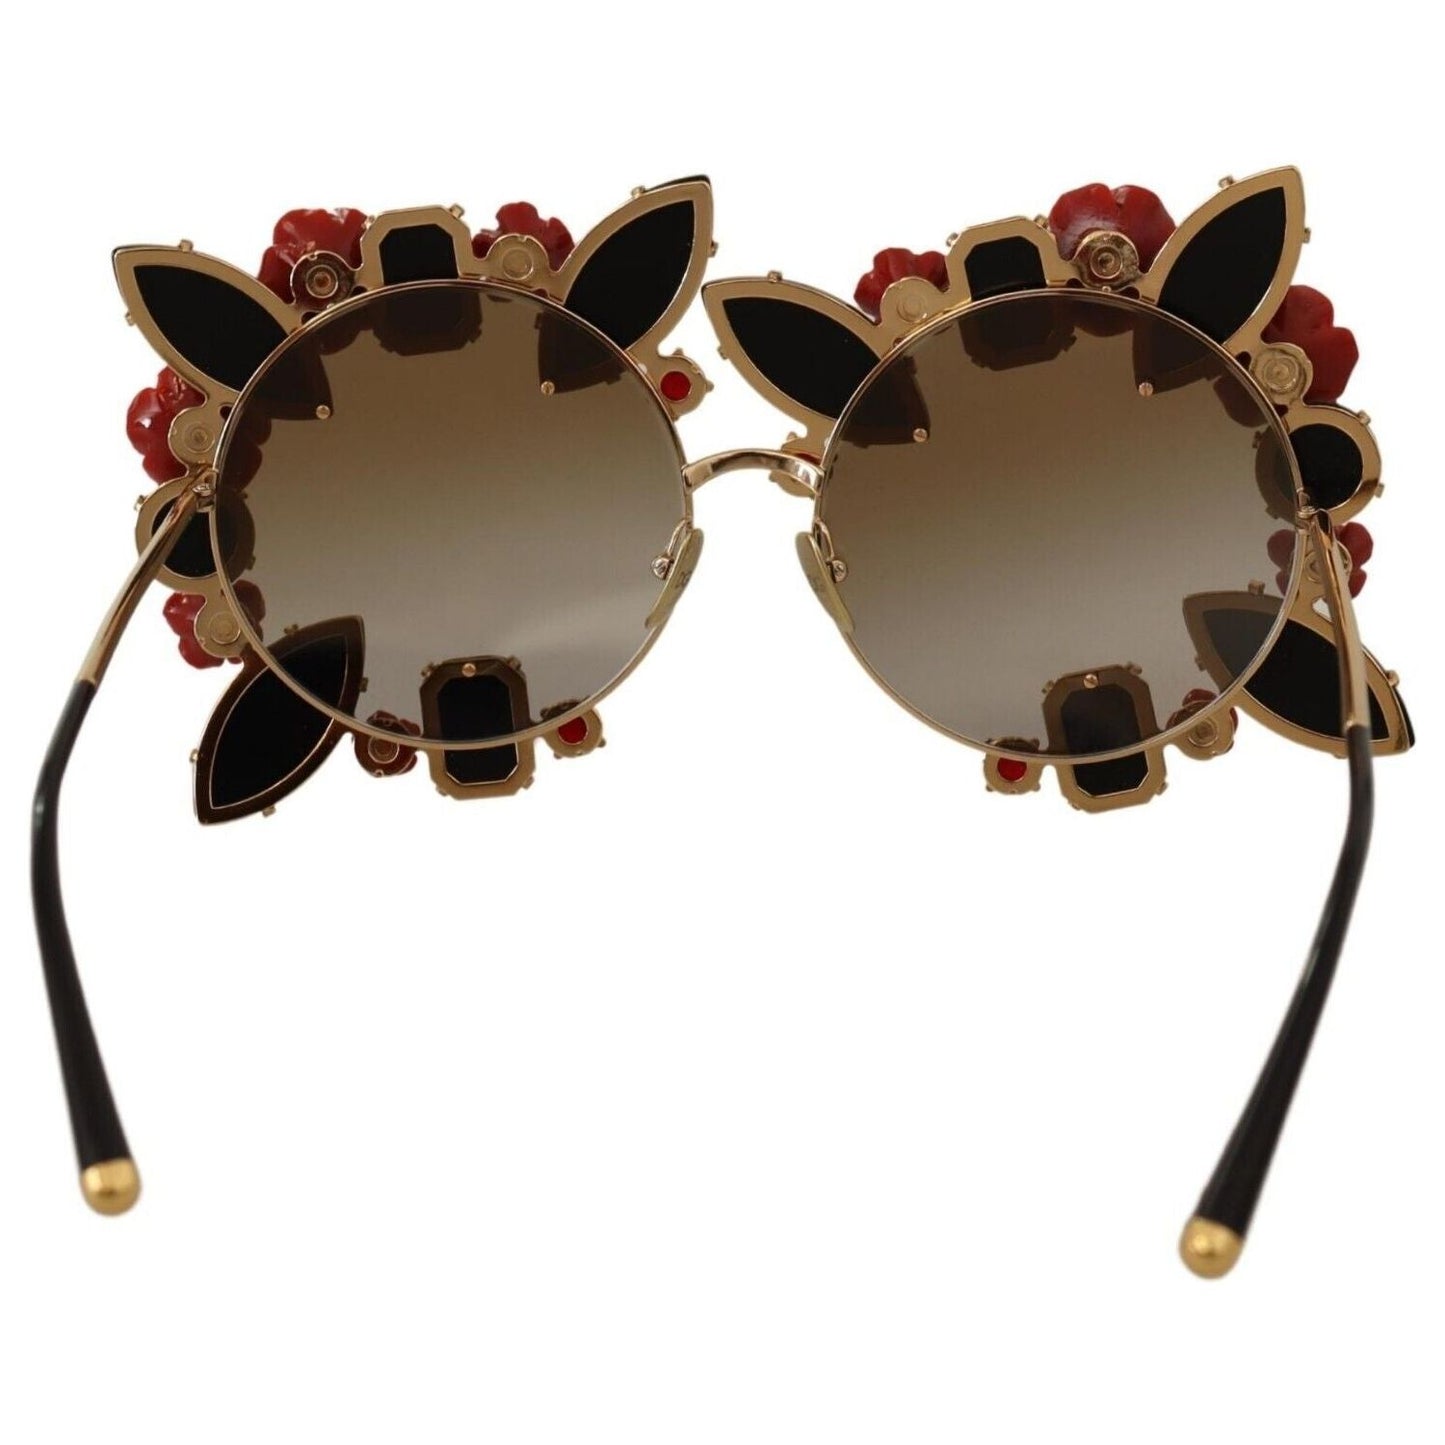 Dolce & Gabbana Elegant Round Metal Sunglasses with Rose Detail gold-metal-frame-roses-embellished-sunglasses WOMAN SUNGLASSES s-l1600-2-36-0448b0ec-d8a.jpg